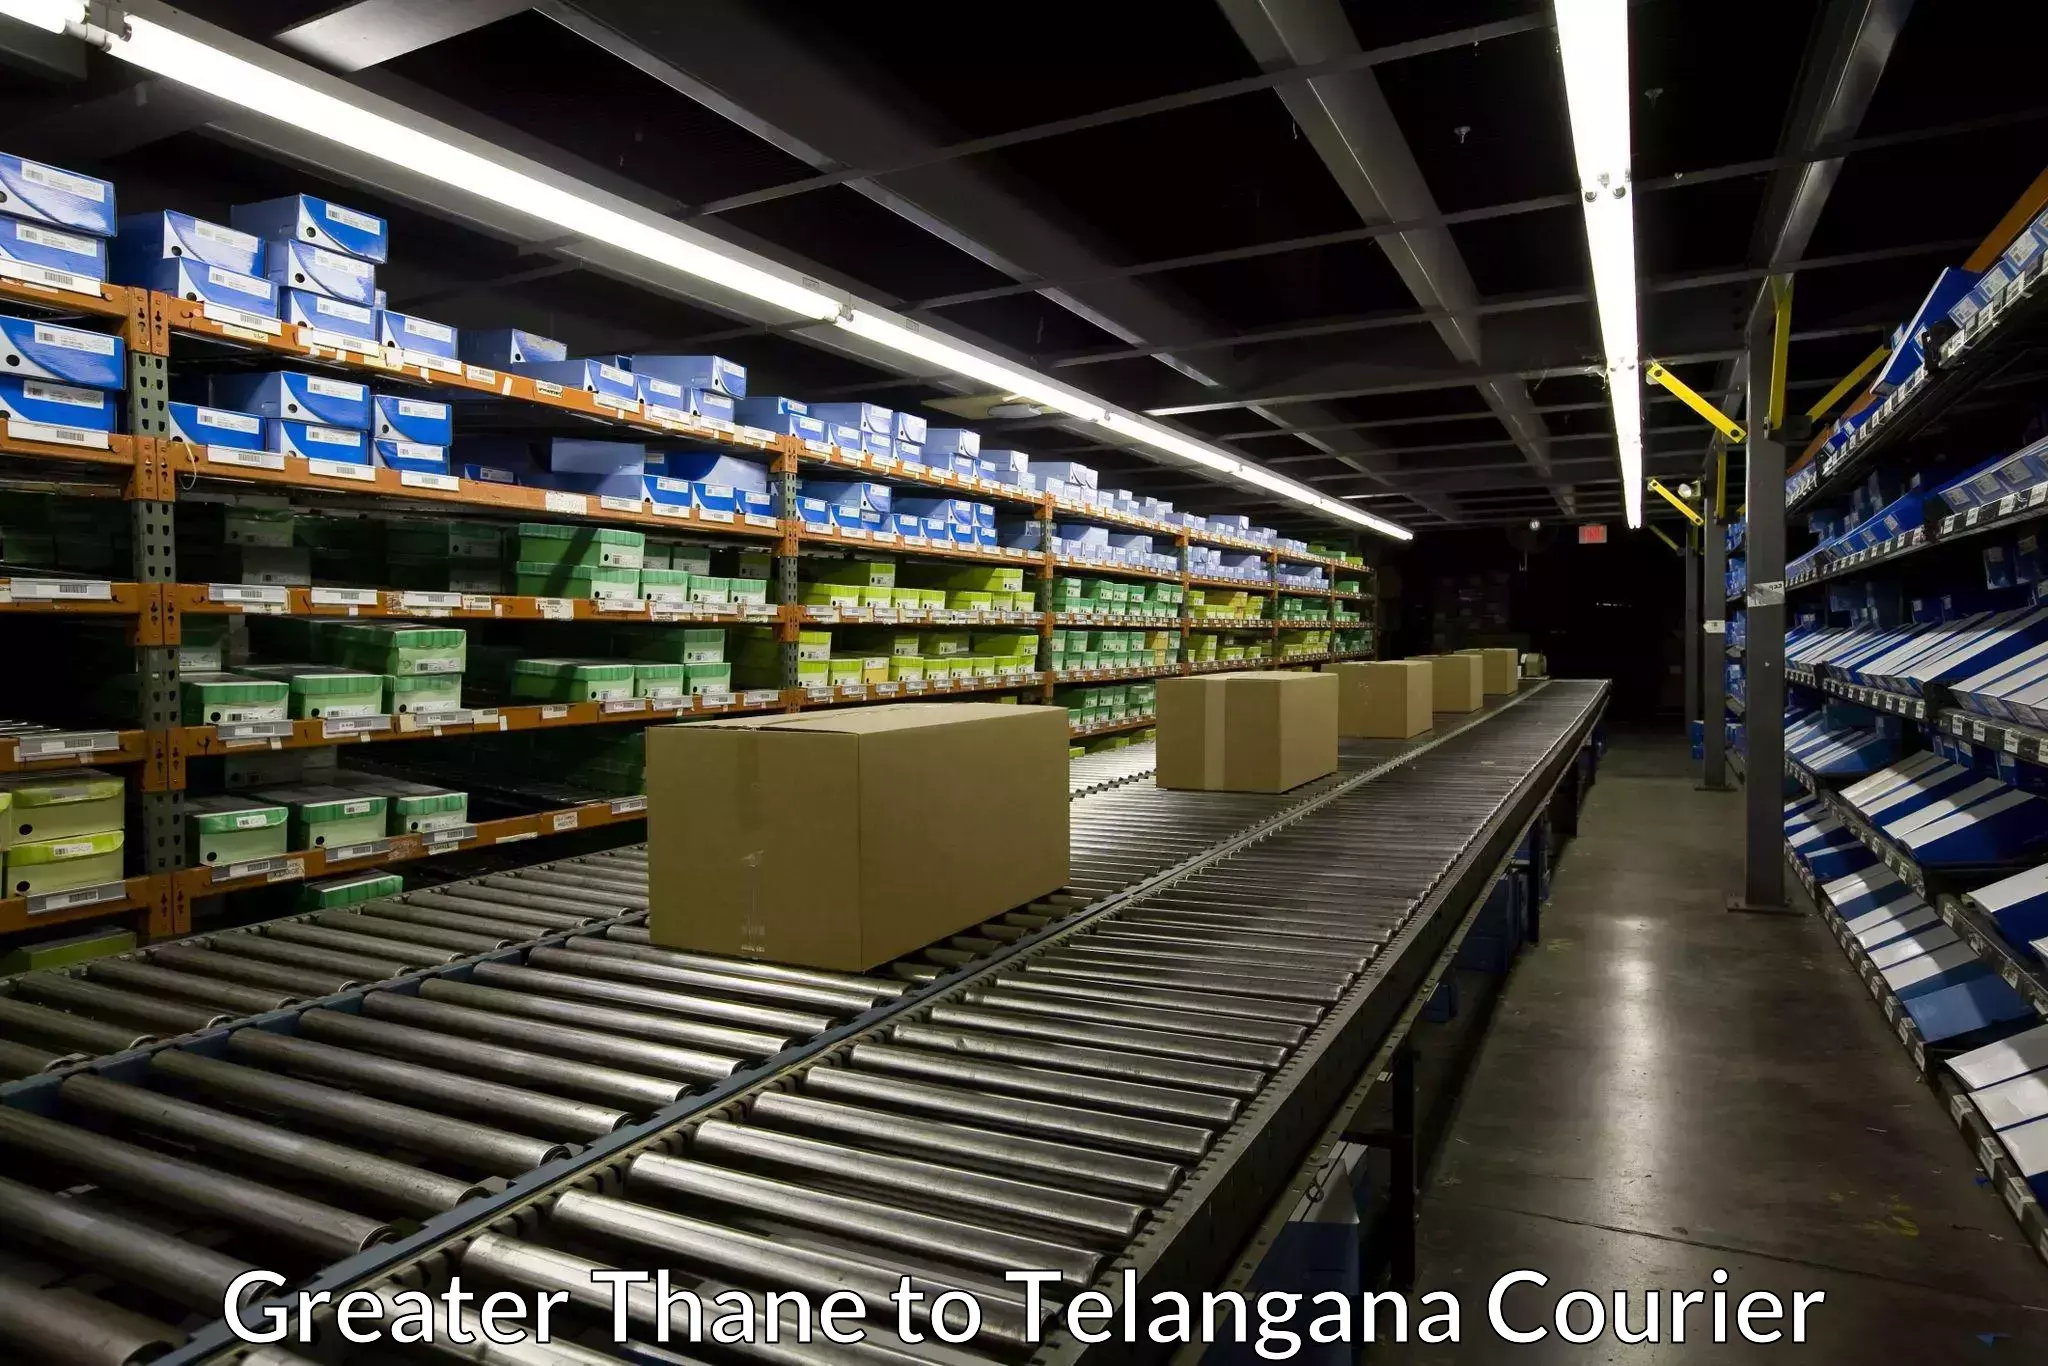 High-performance logistics Greater Thane to Veenavanka